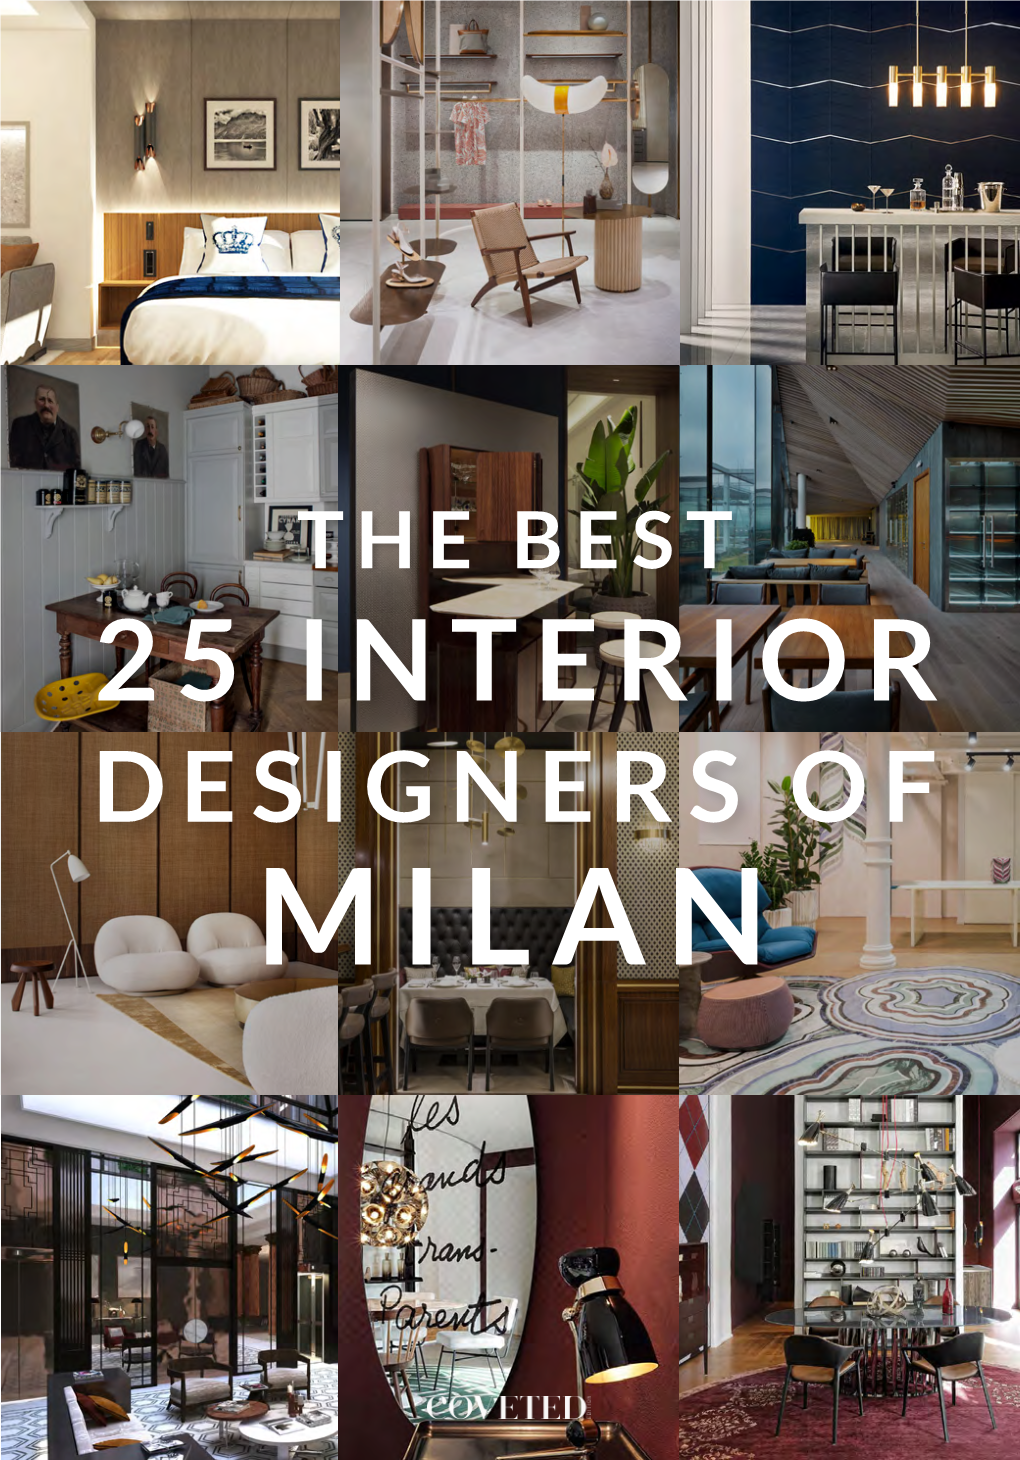 Designers of Milan 2 3 the Best 25 Interior Designers of Milan